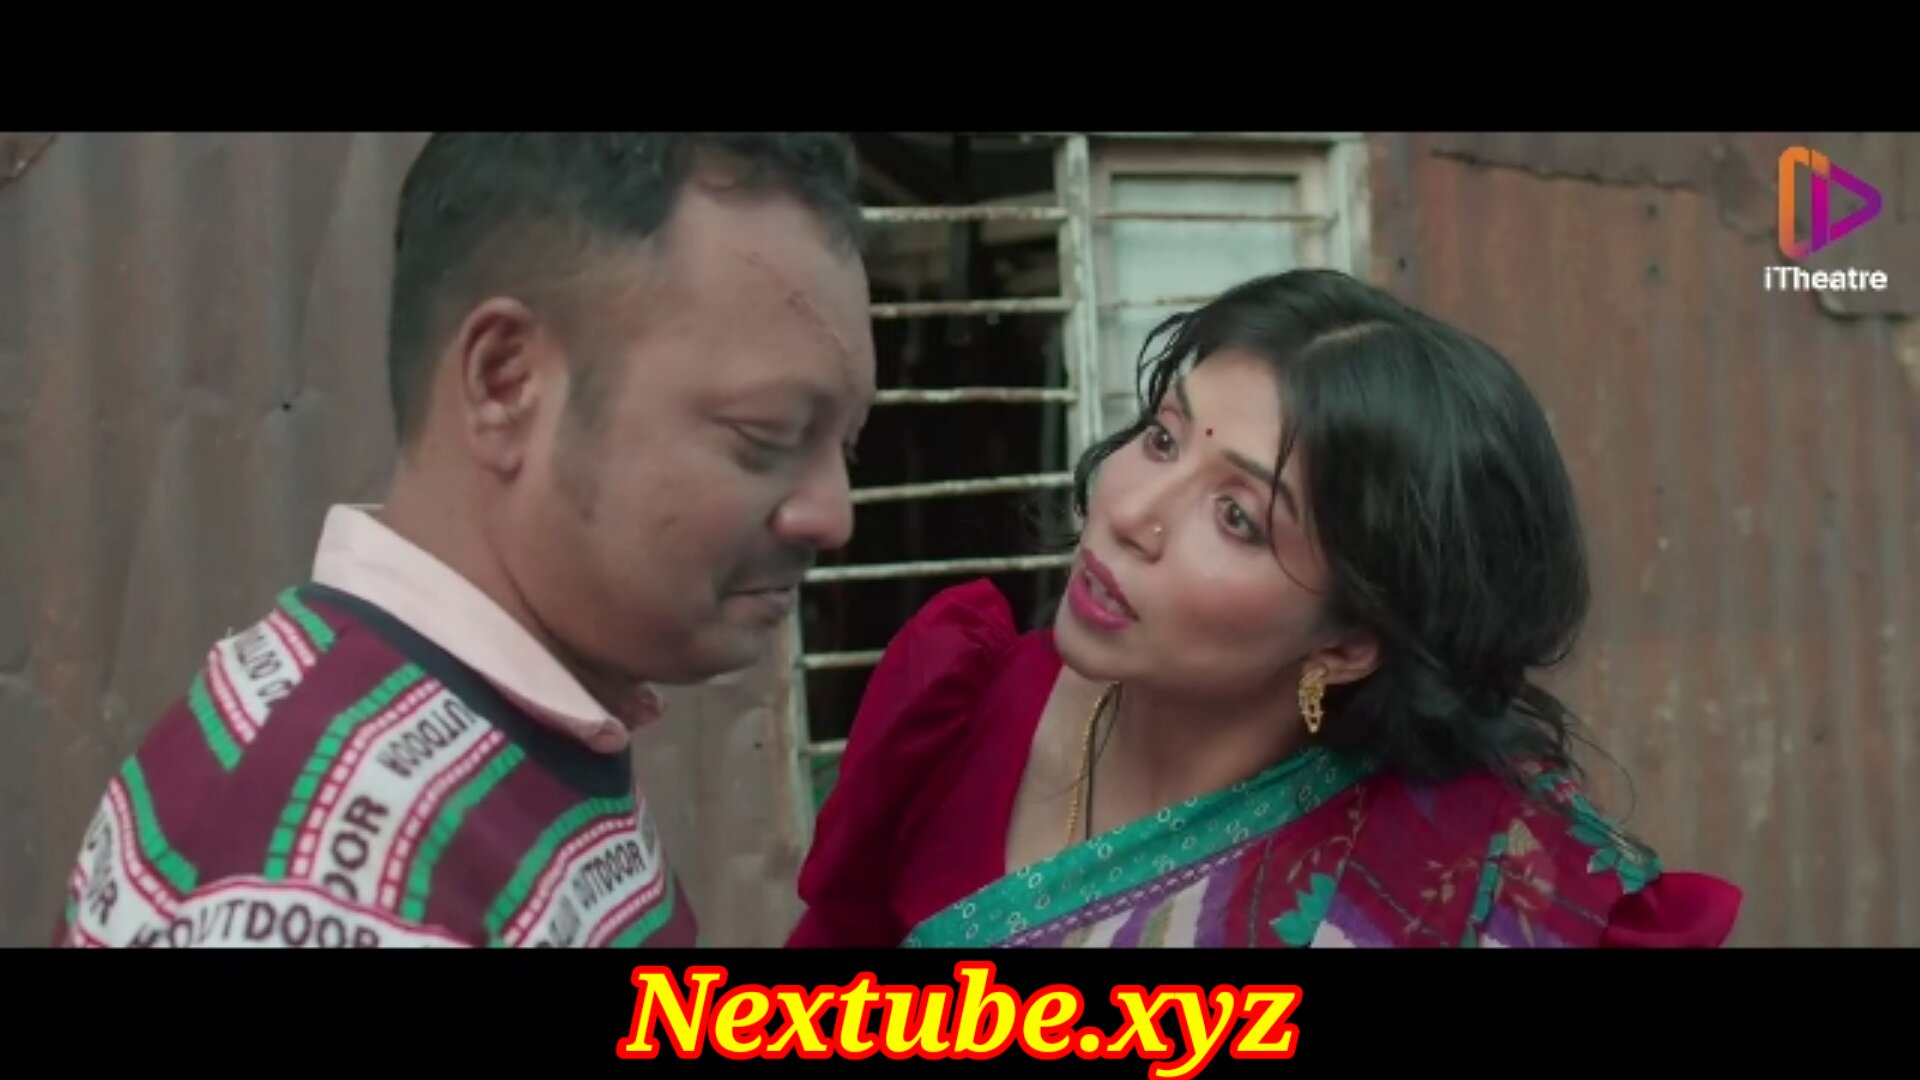 Koshai (2021) itheatre full movie bangla download